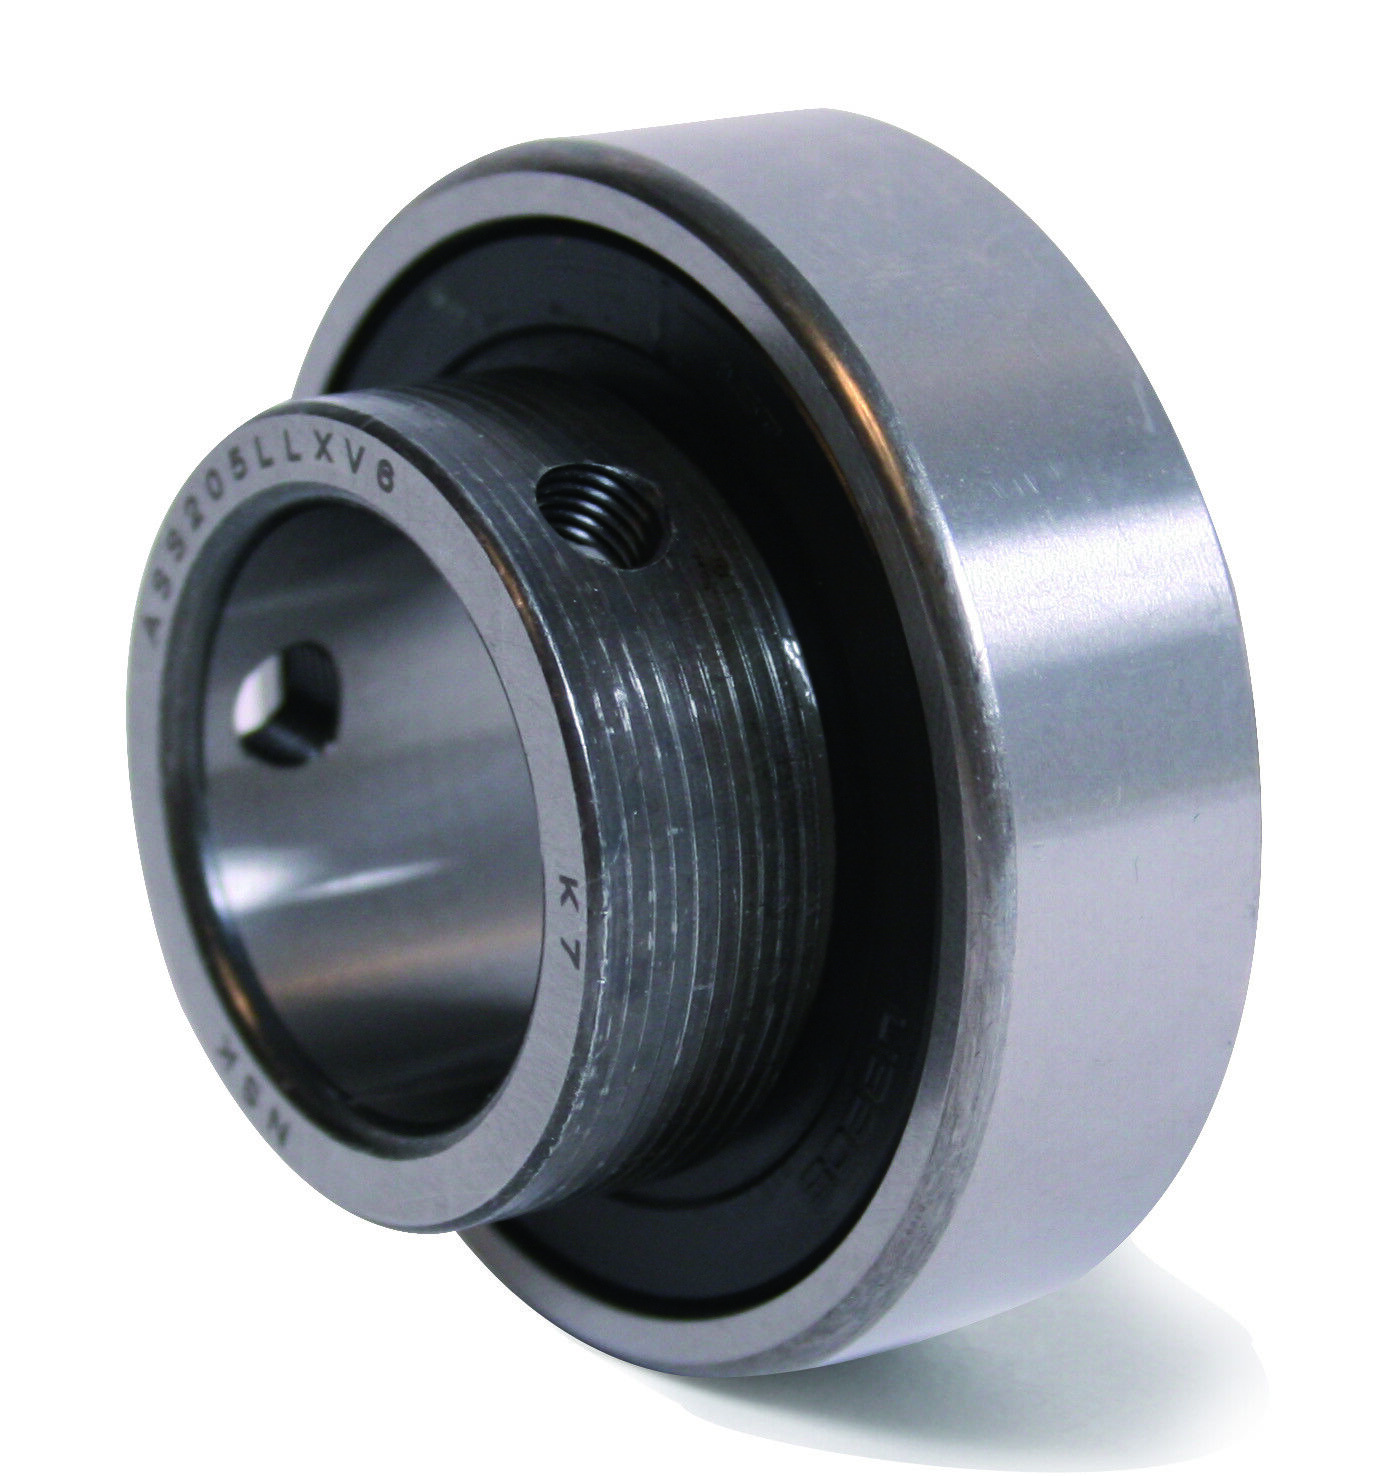 NTN Wheel Bearing Fits Yamaha OEM# 93306-20589-00